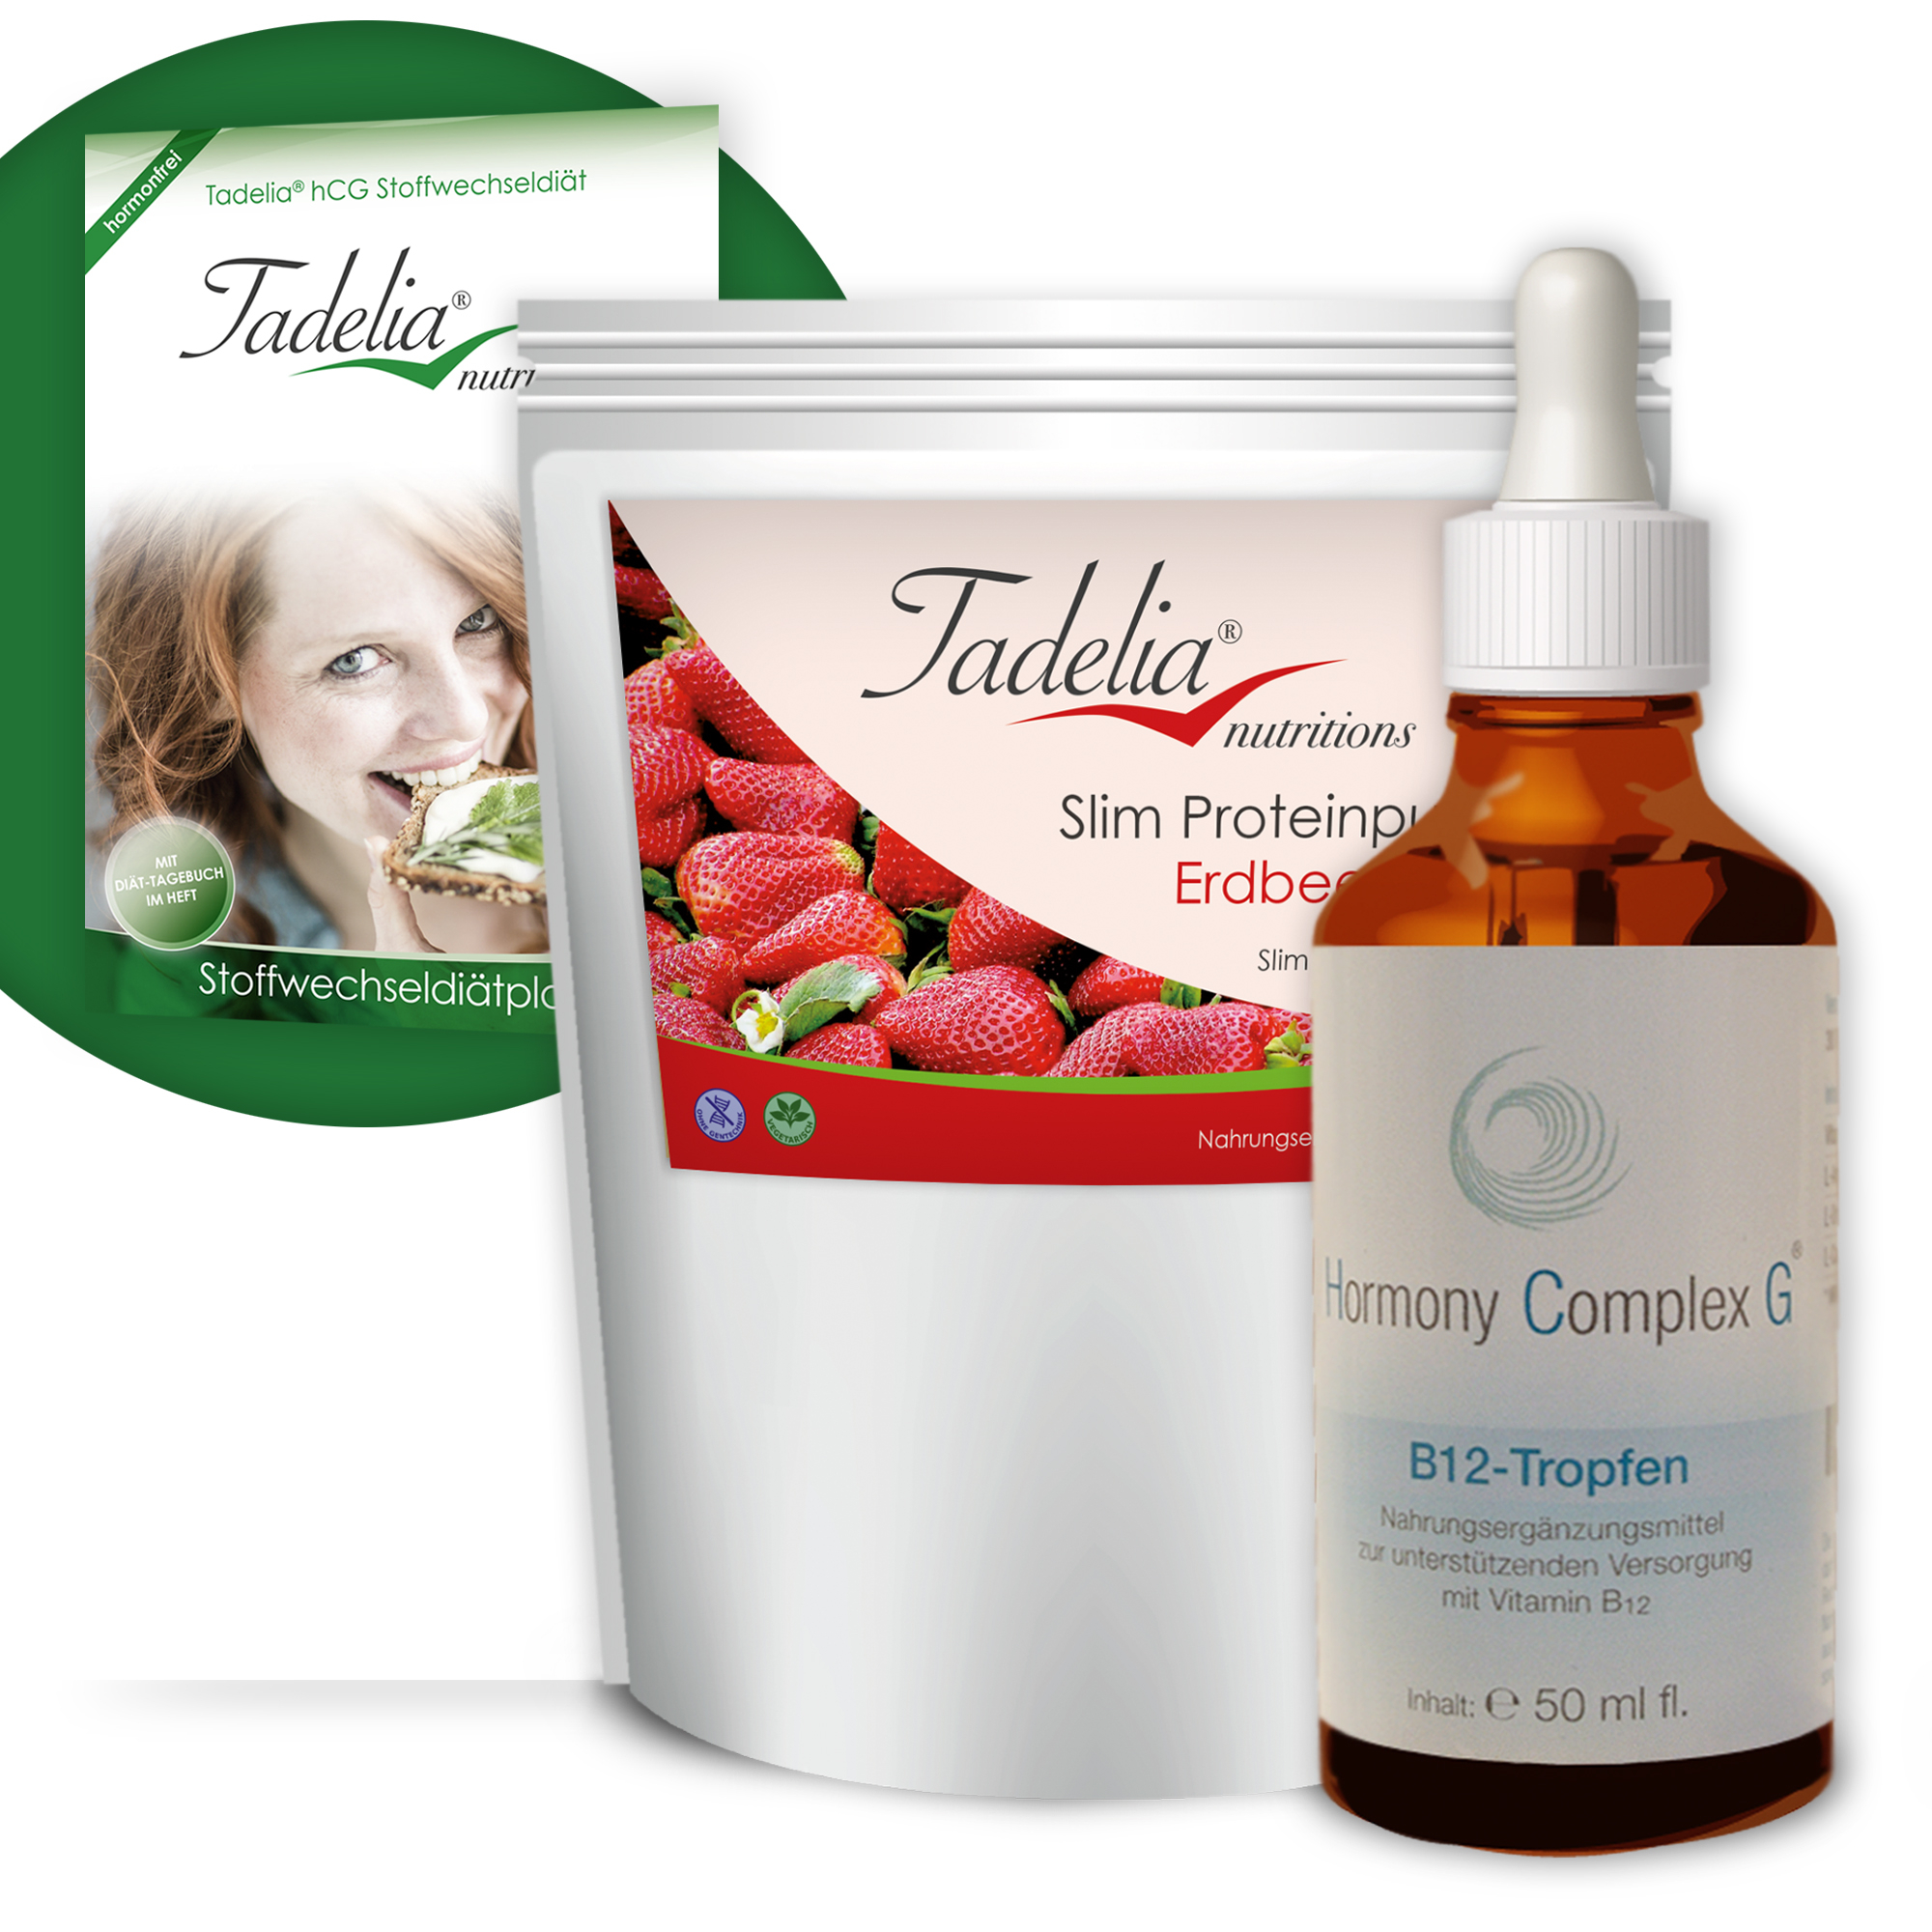 Tadelia® Slim Proteinpulver Erdbeere mit Tadelia hCG Stoffwechseldiätplan + Hormony Complex G B12 Tropfen